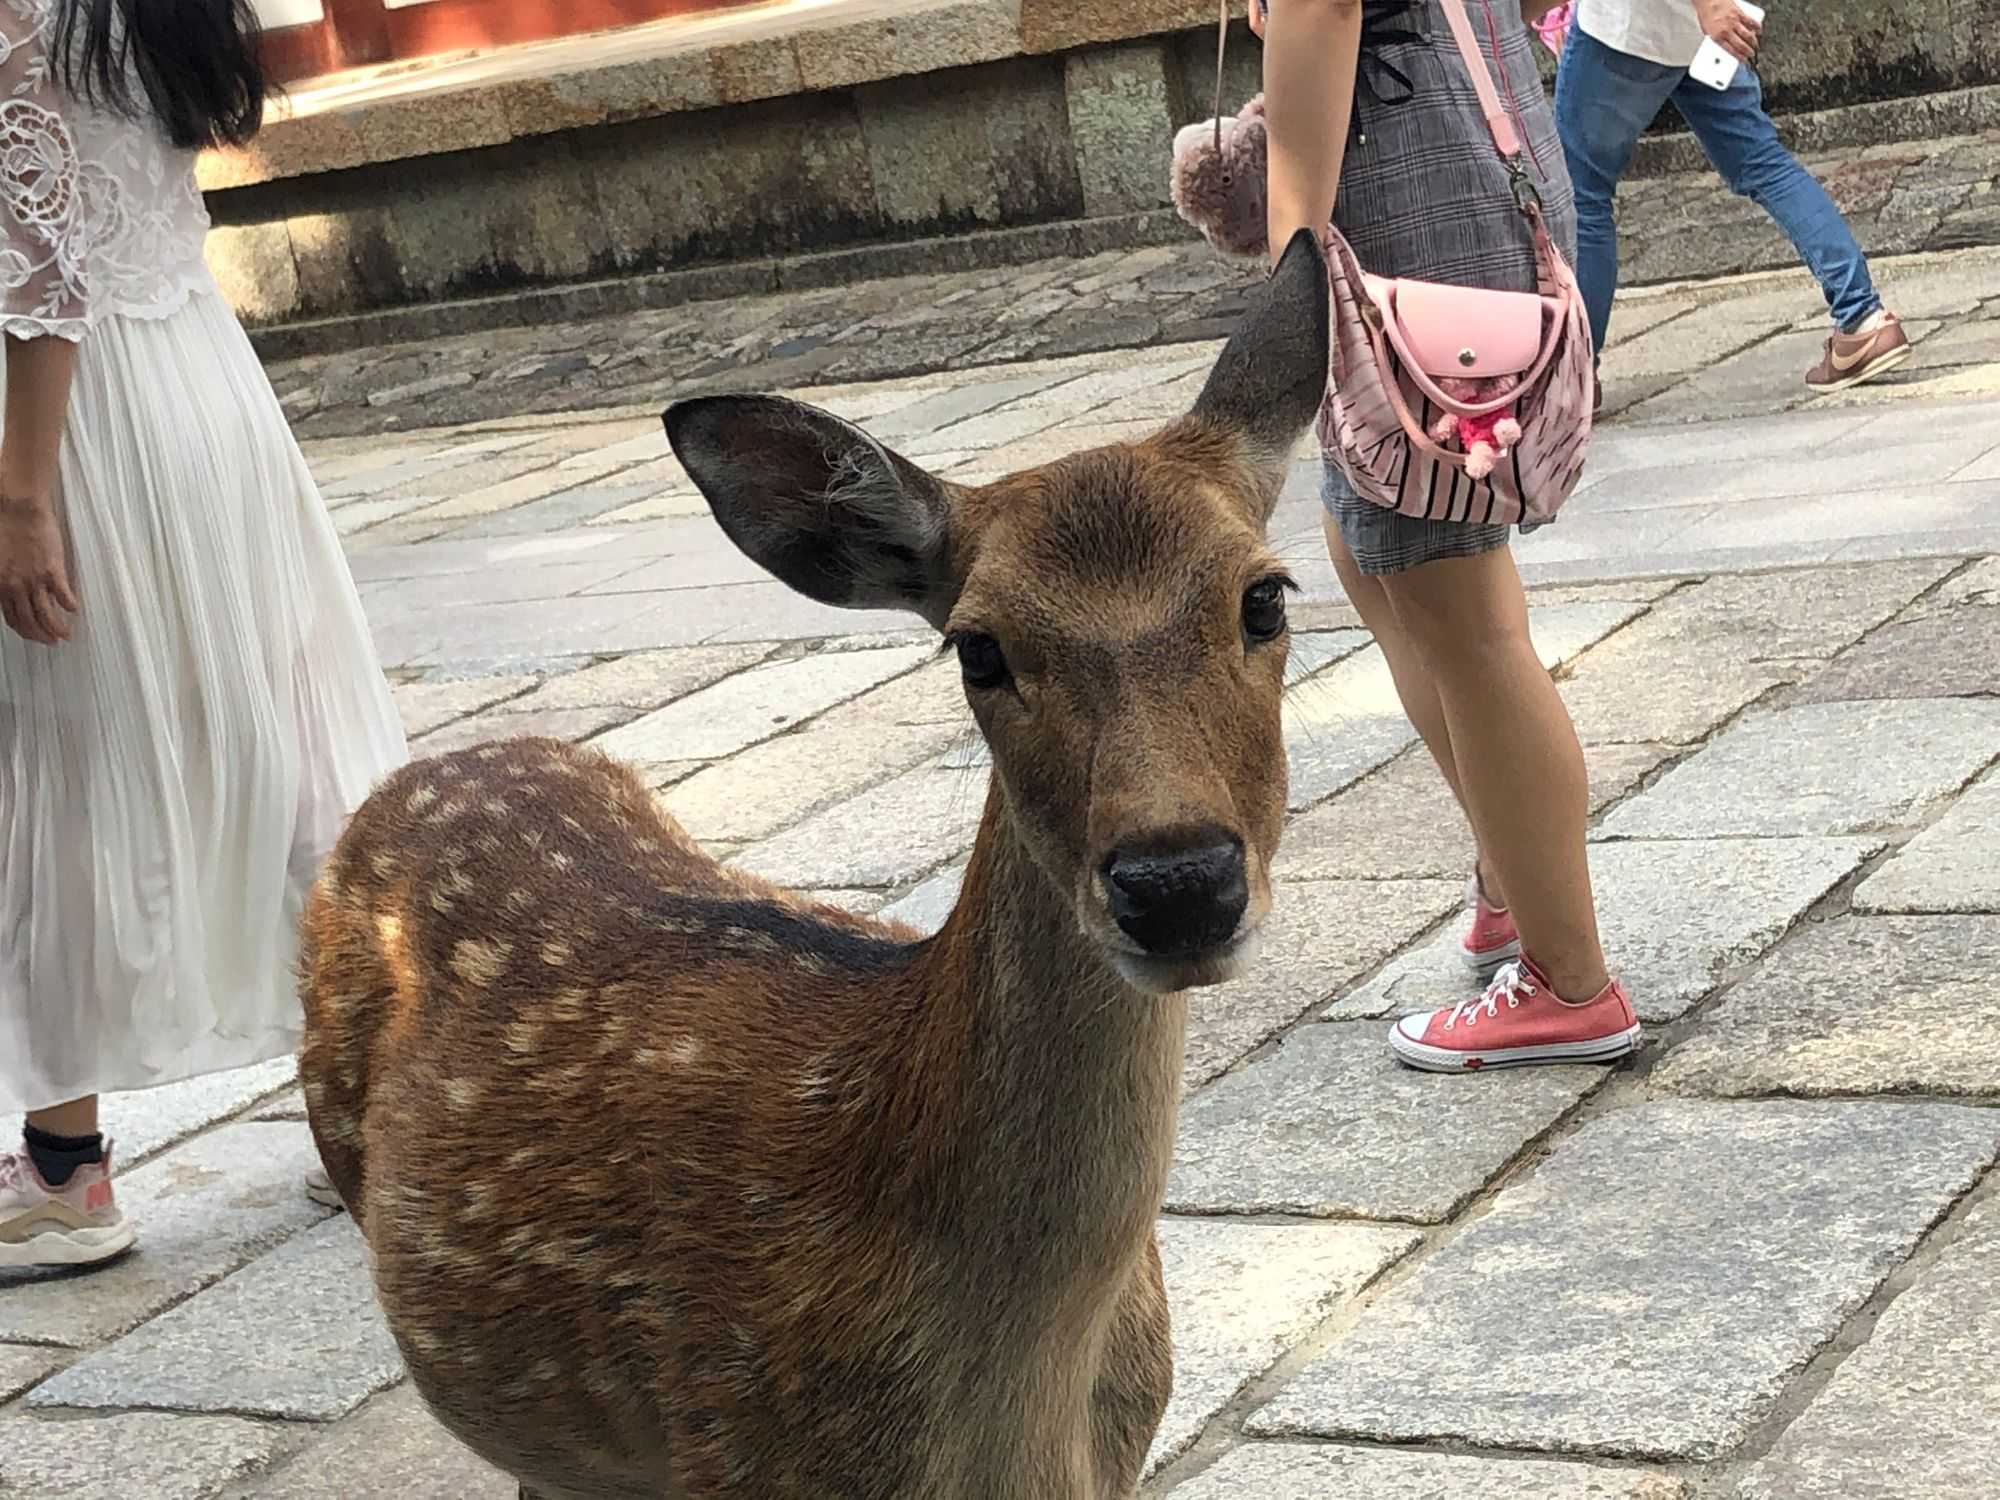 Deer at Nara Park (Image by author)